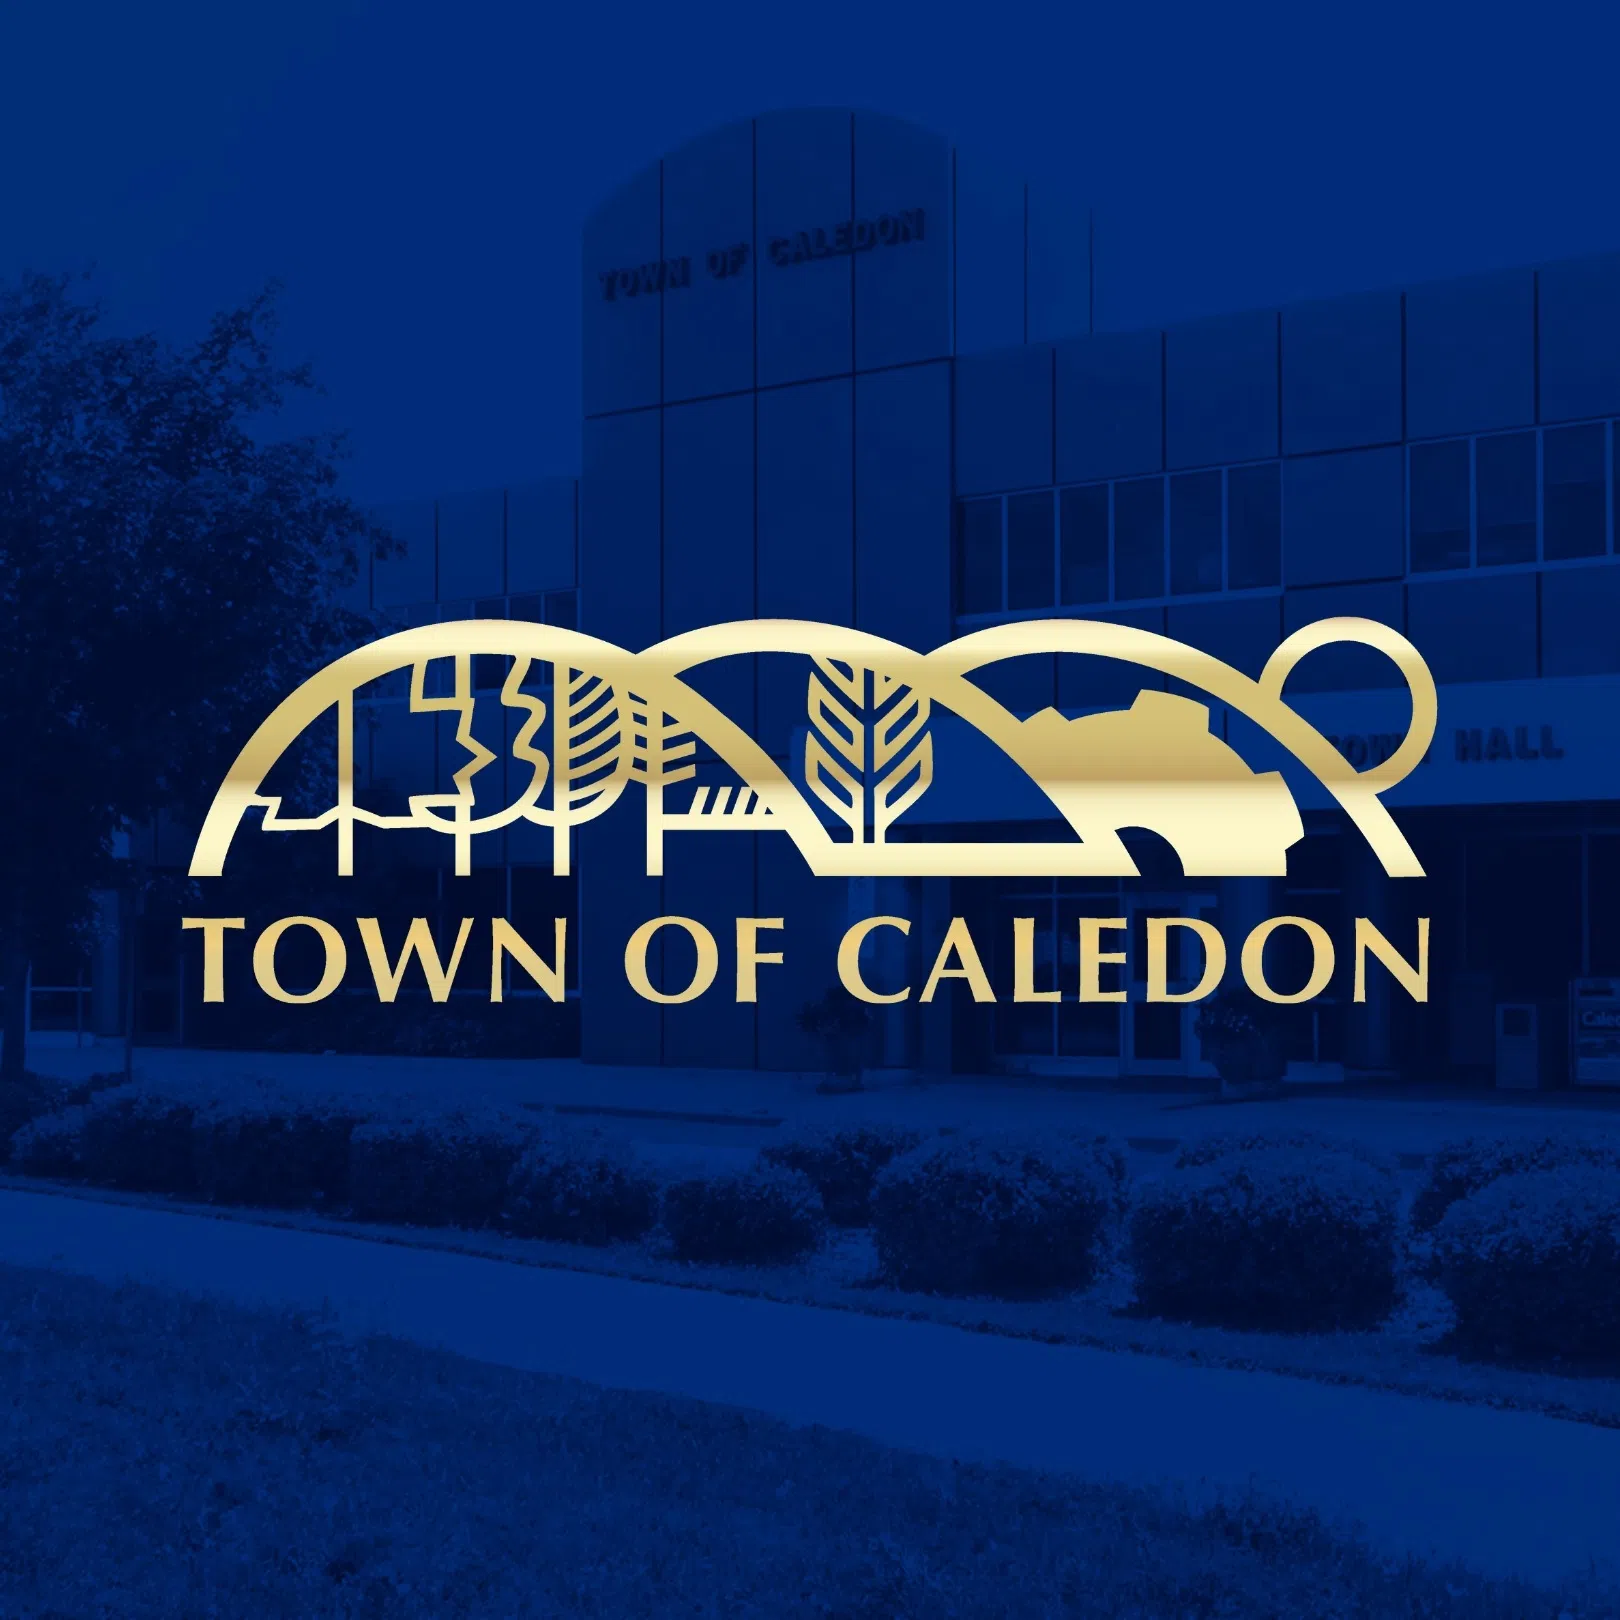 Town of Caledon awarded Burlington Cup